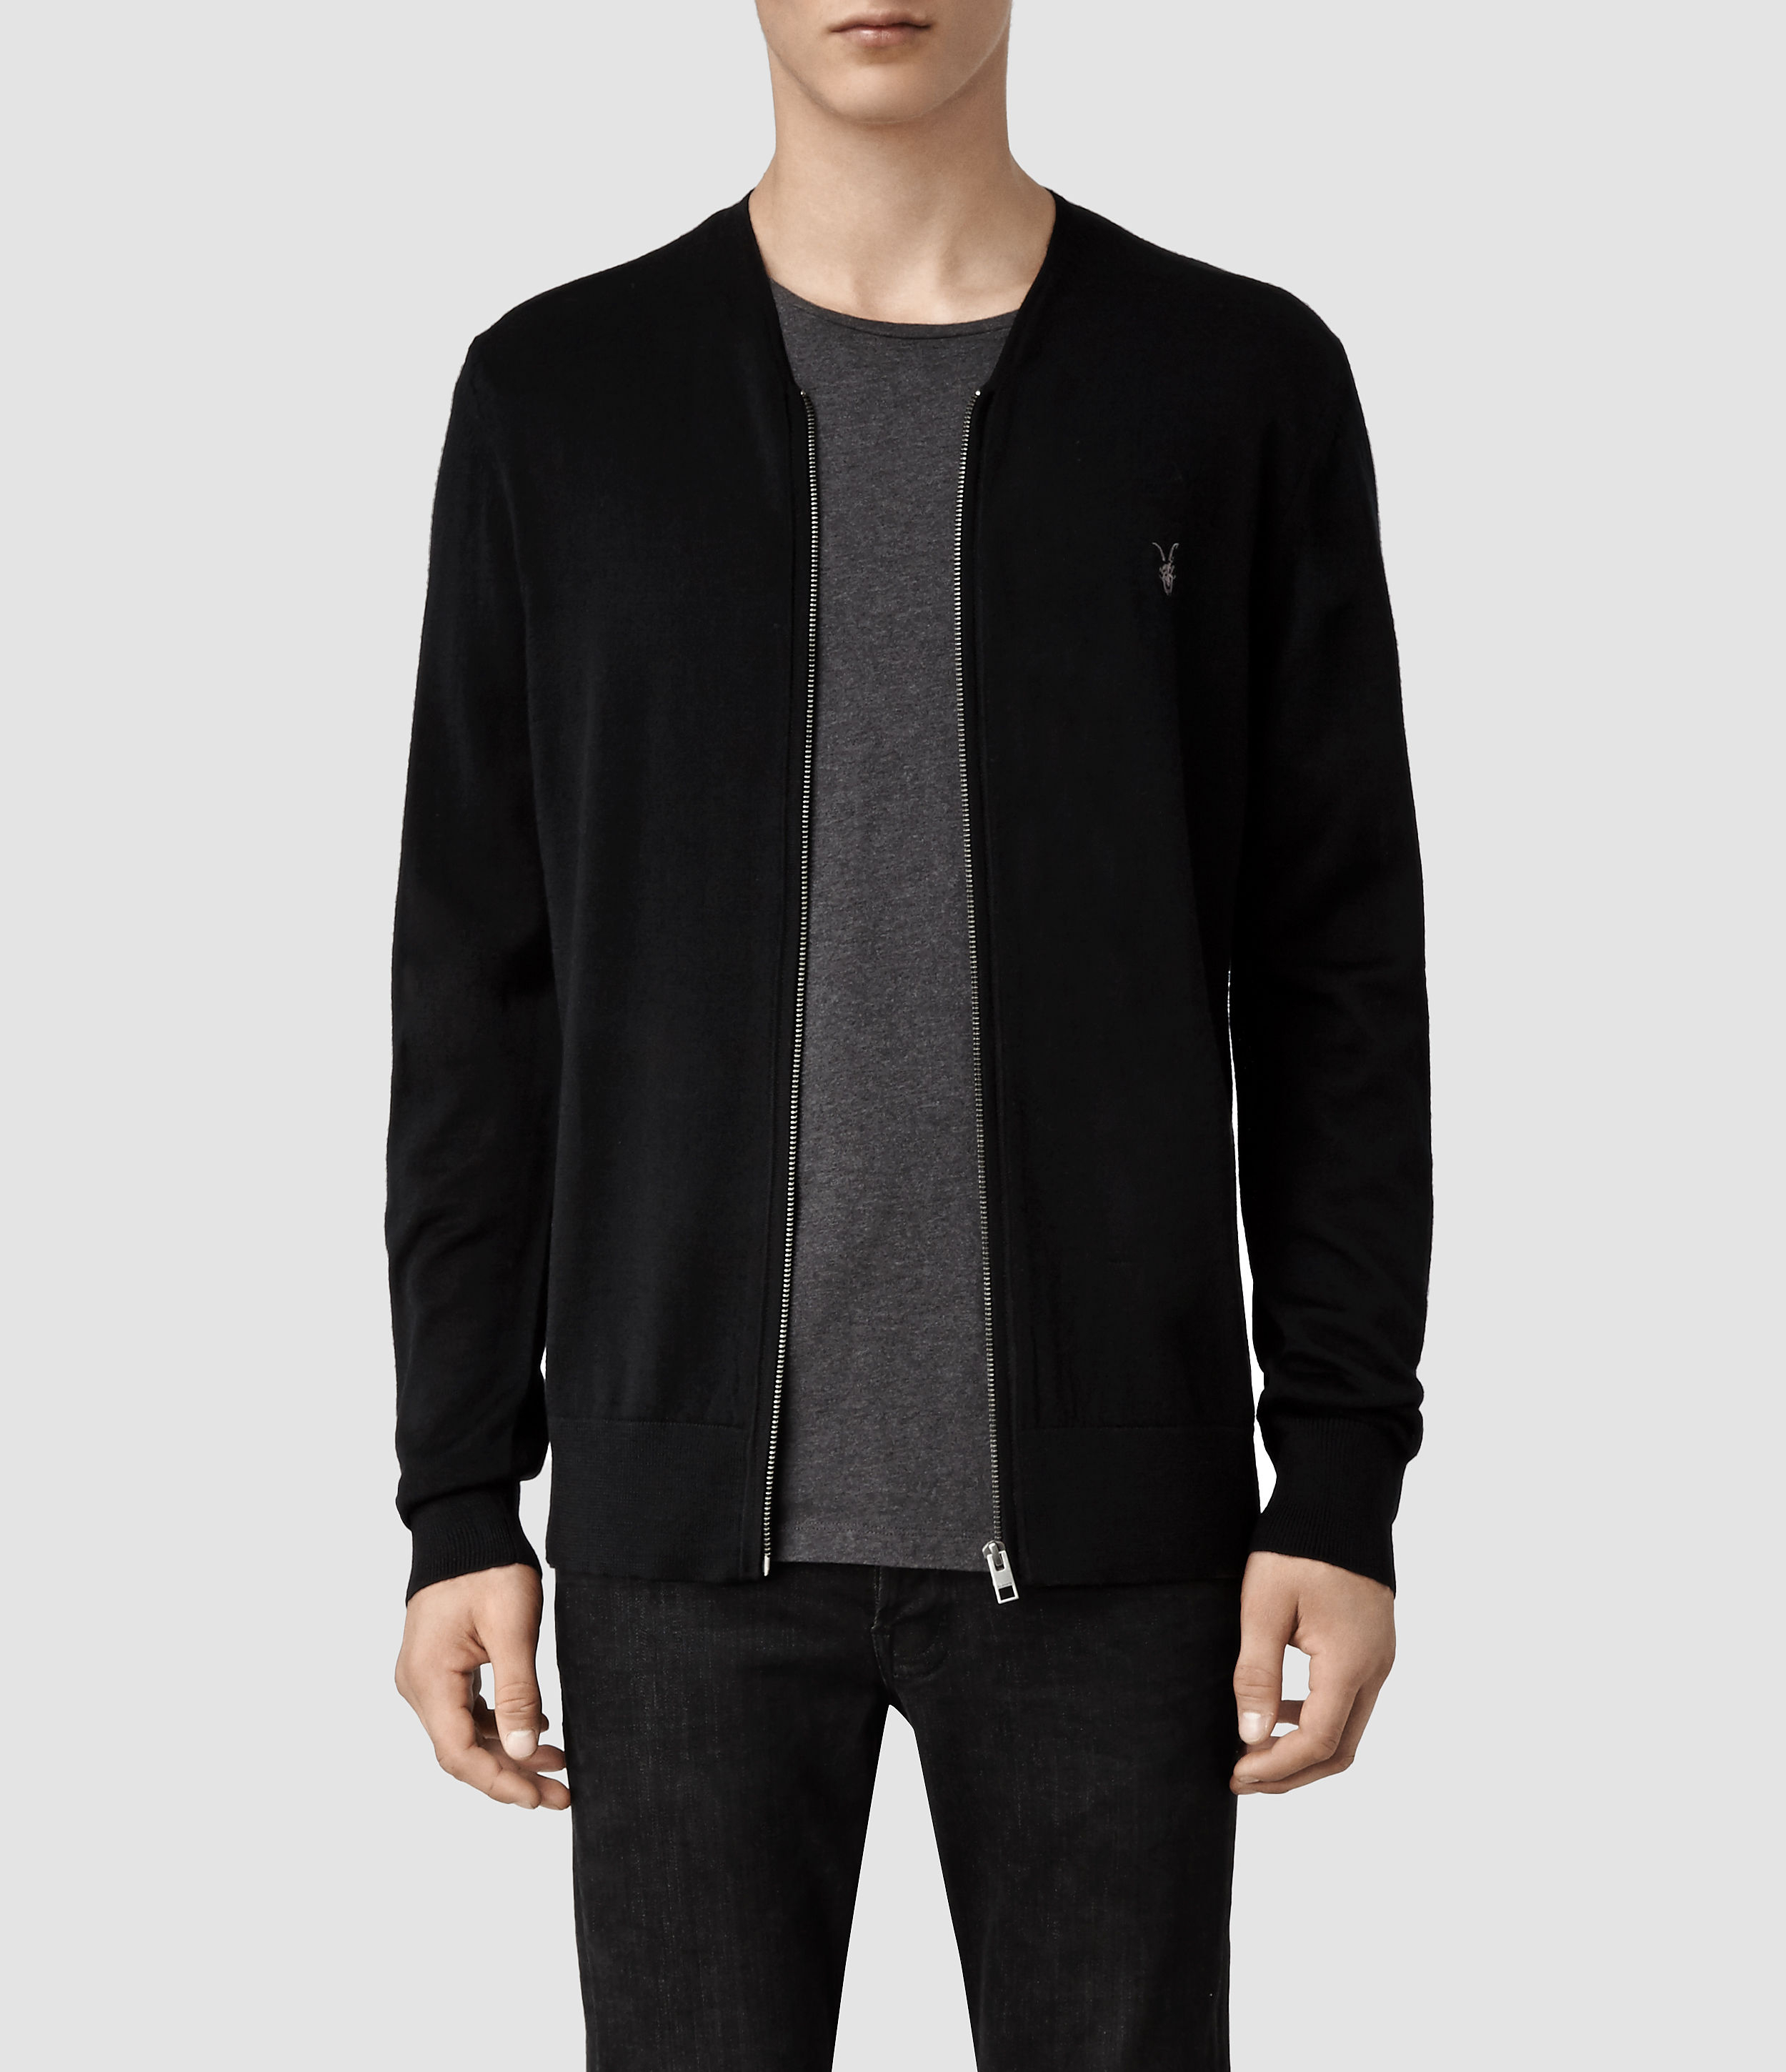 AllSaints Mode Merino Zip Cardigan in Black for Men - Lyst